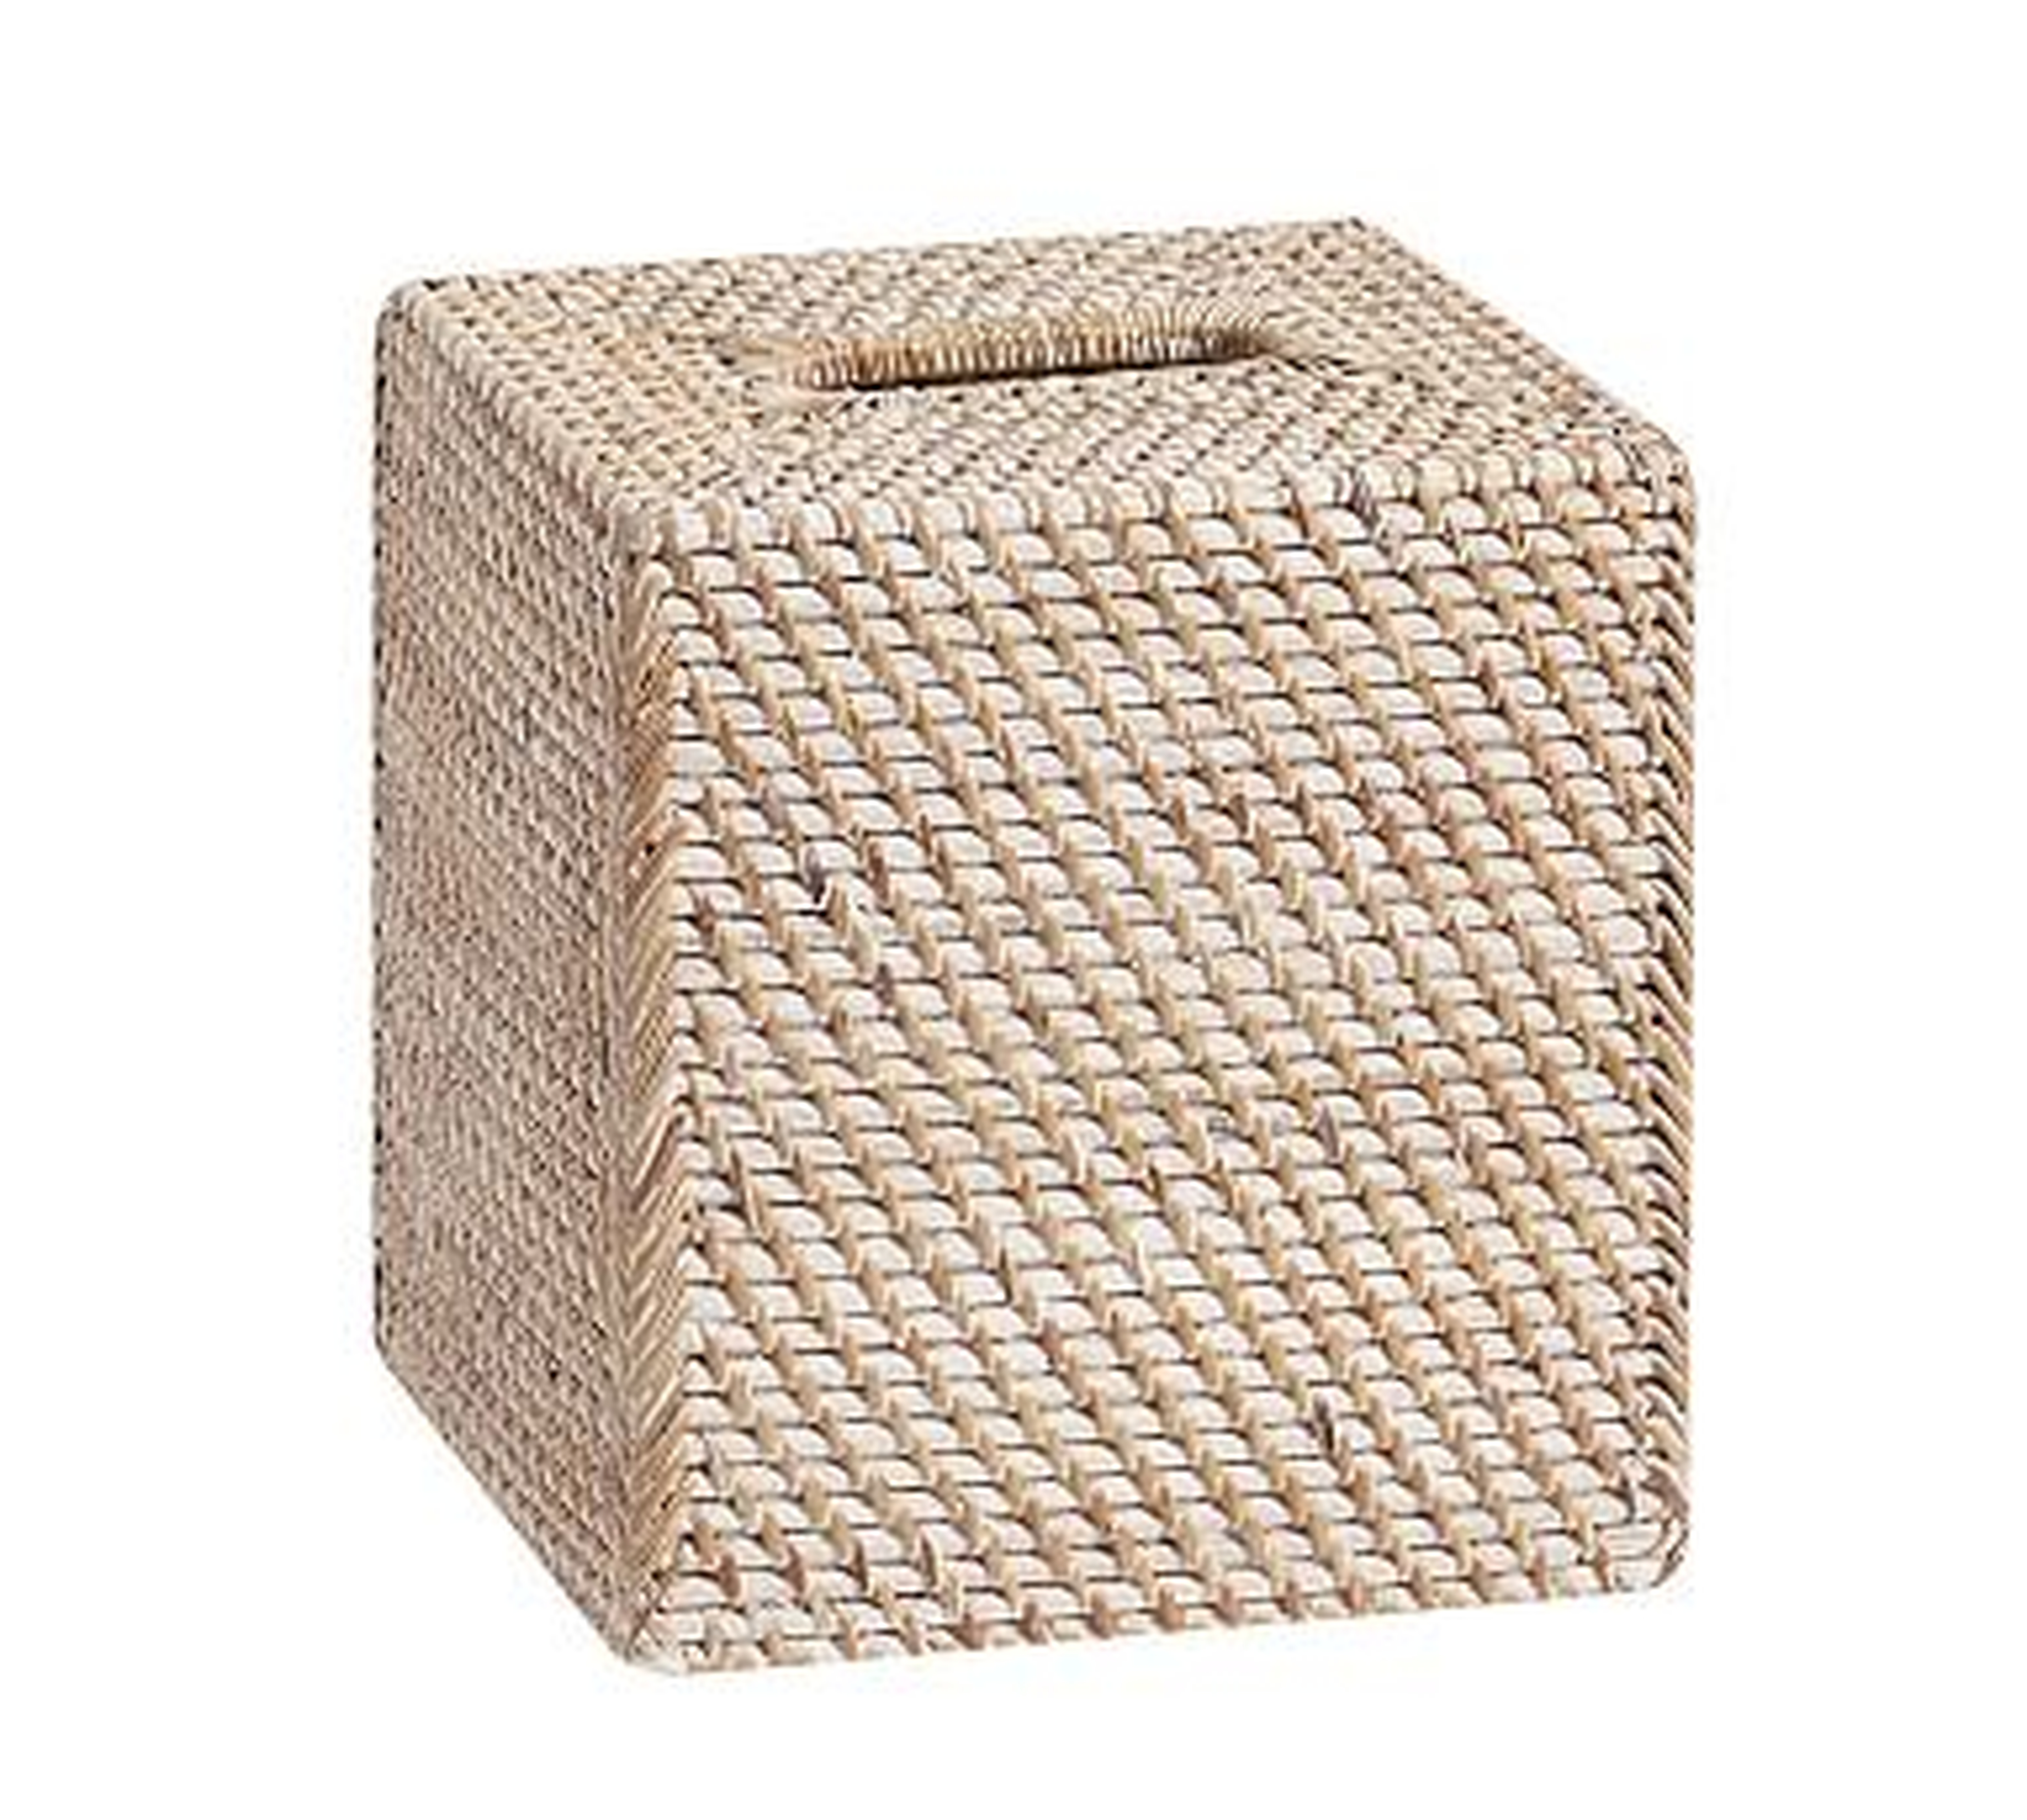 Tava Handwoven Rattan Tissue Box Cover, White Wash - Pottery Barn